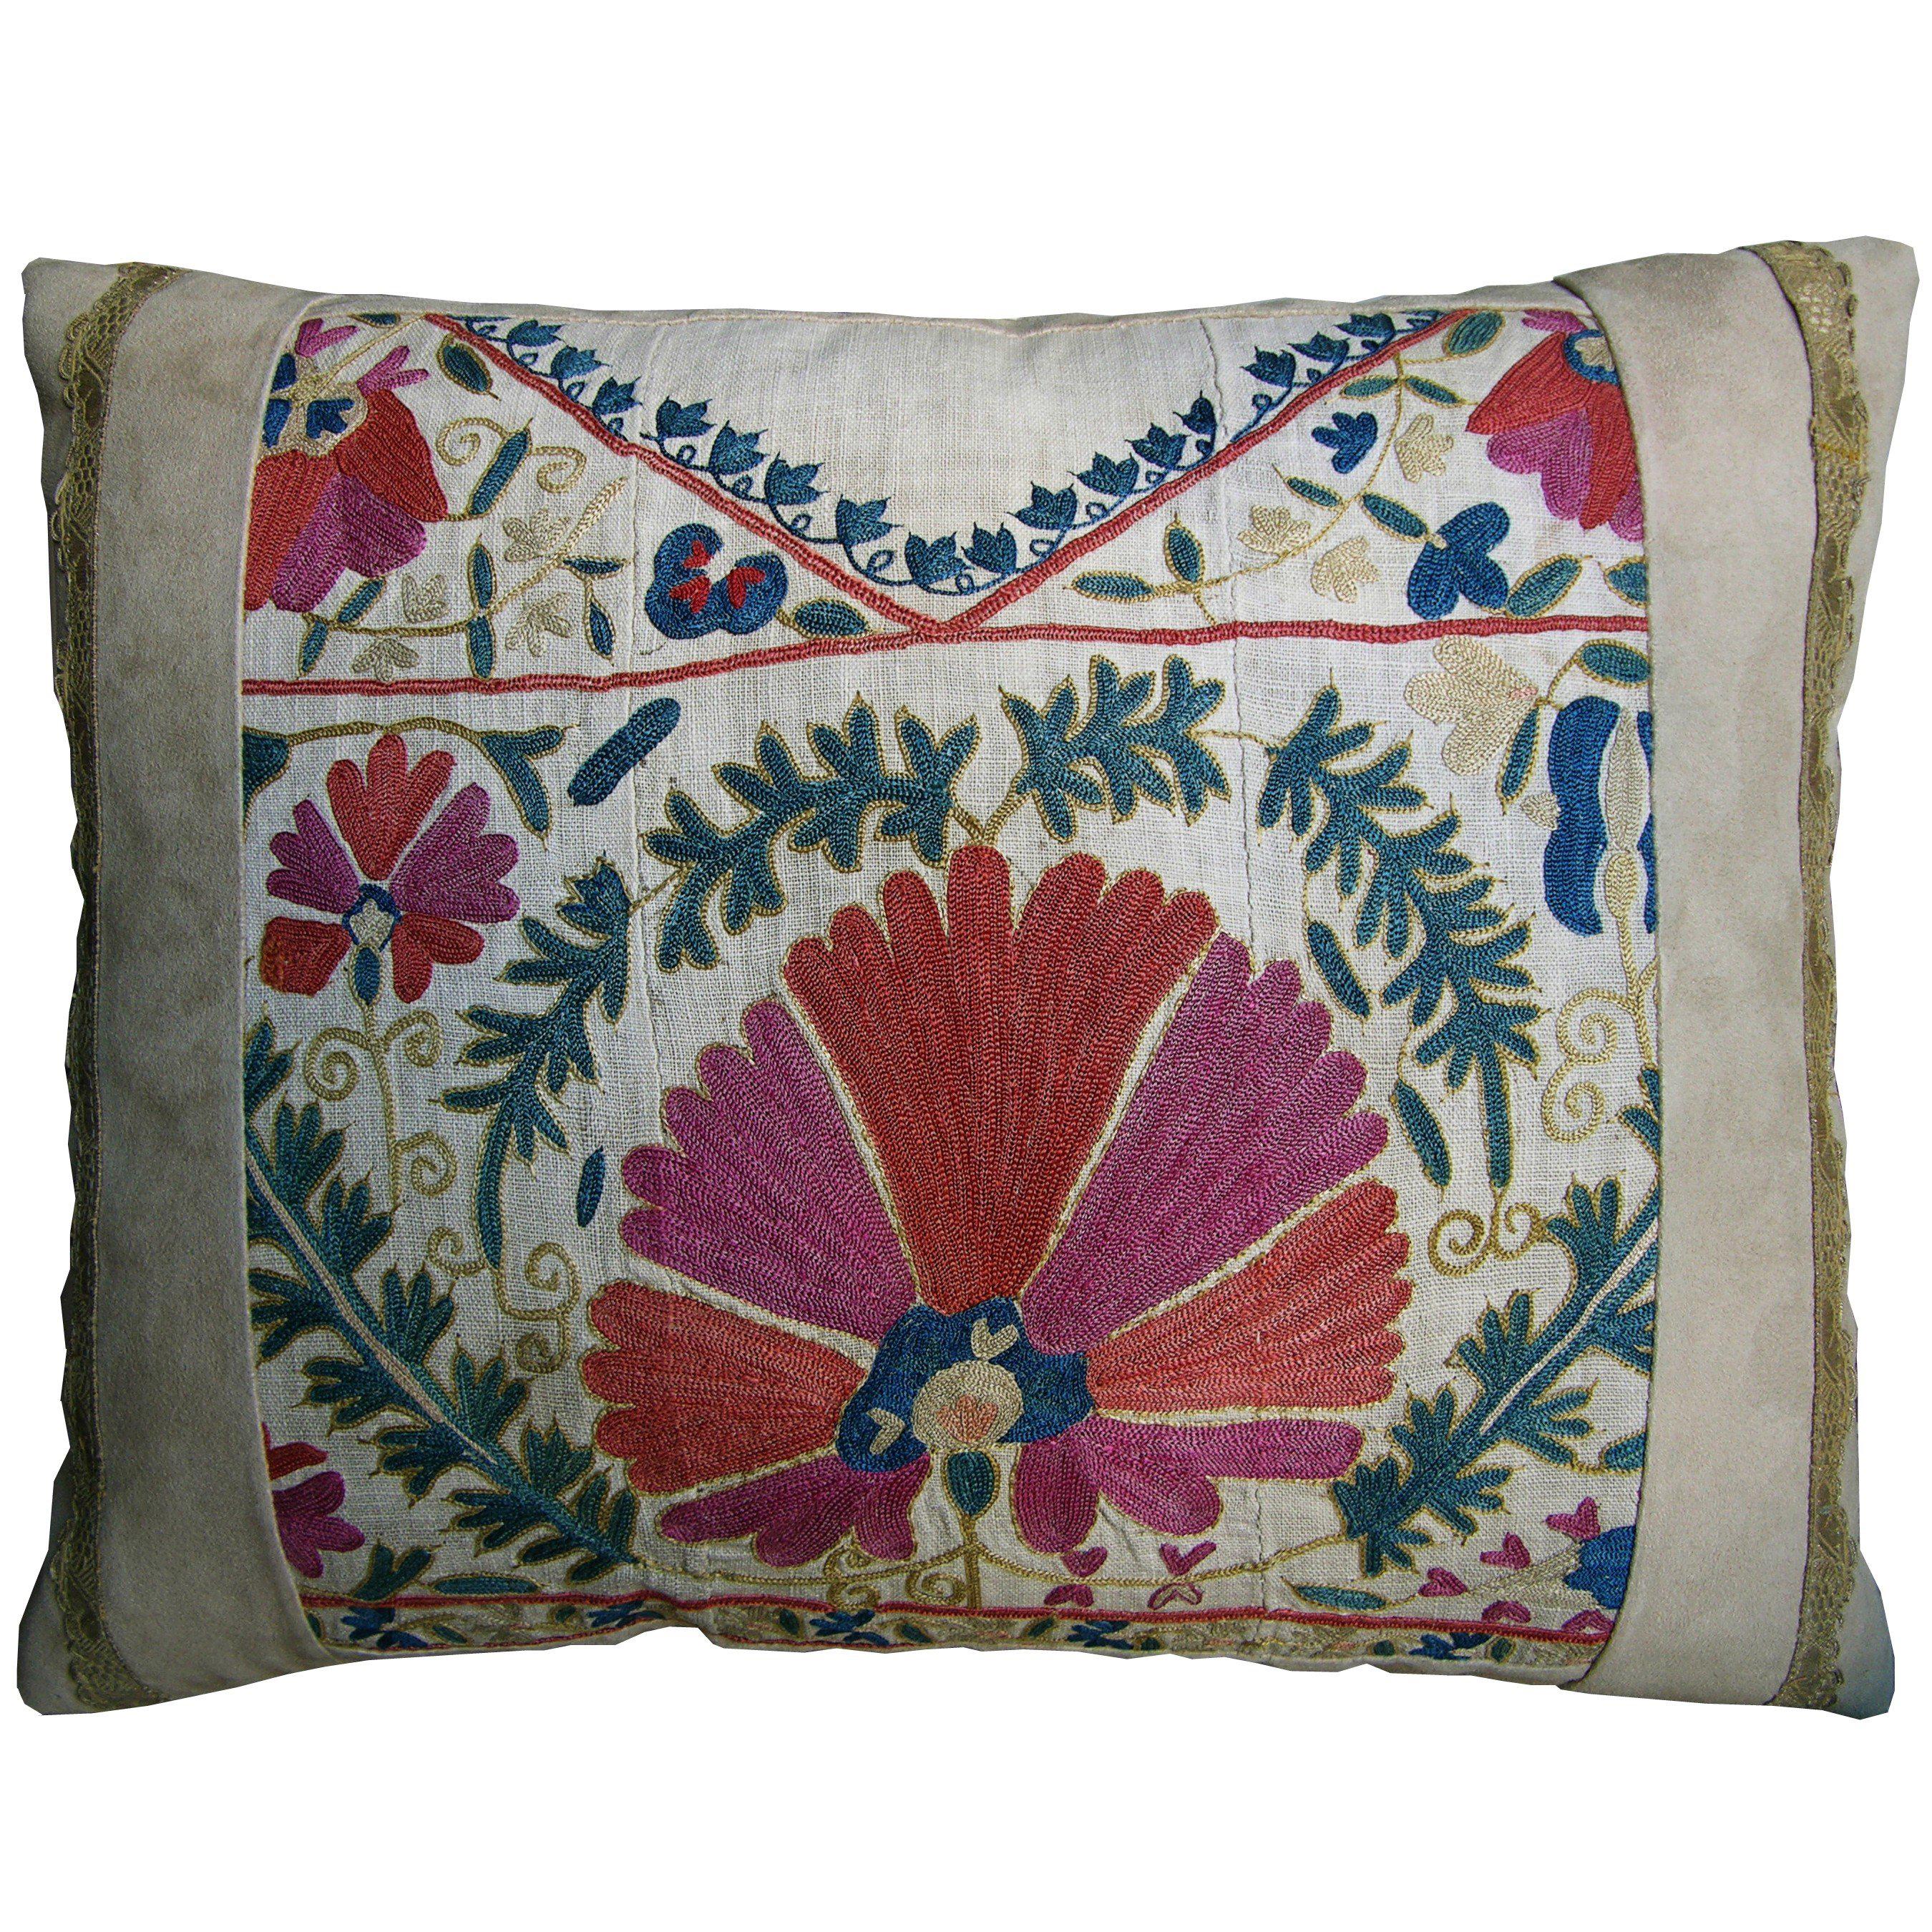 Suzani Embroidered Pillow, circa 1850 1696p